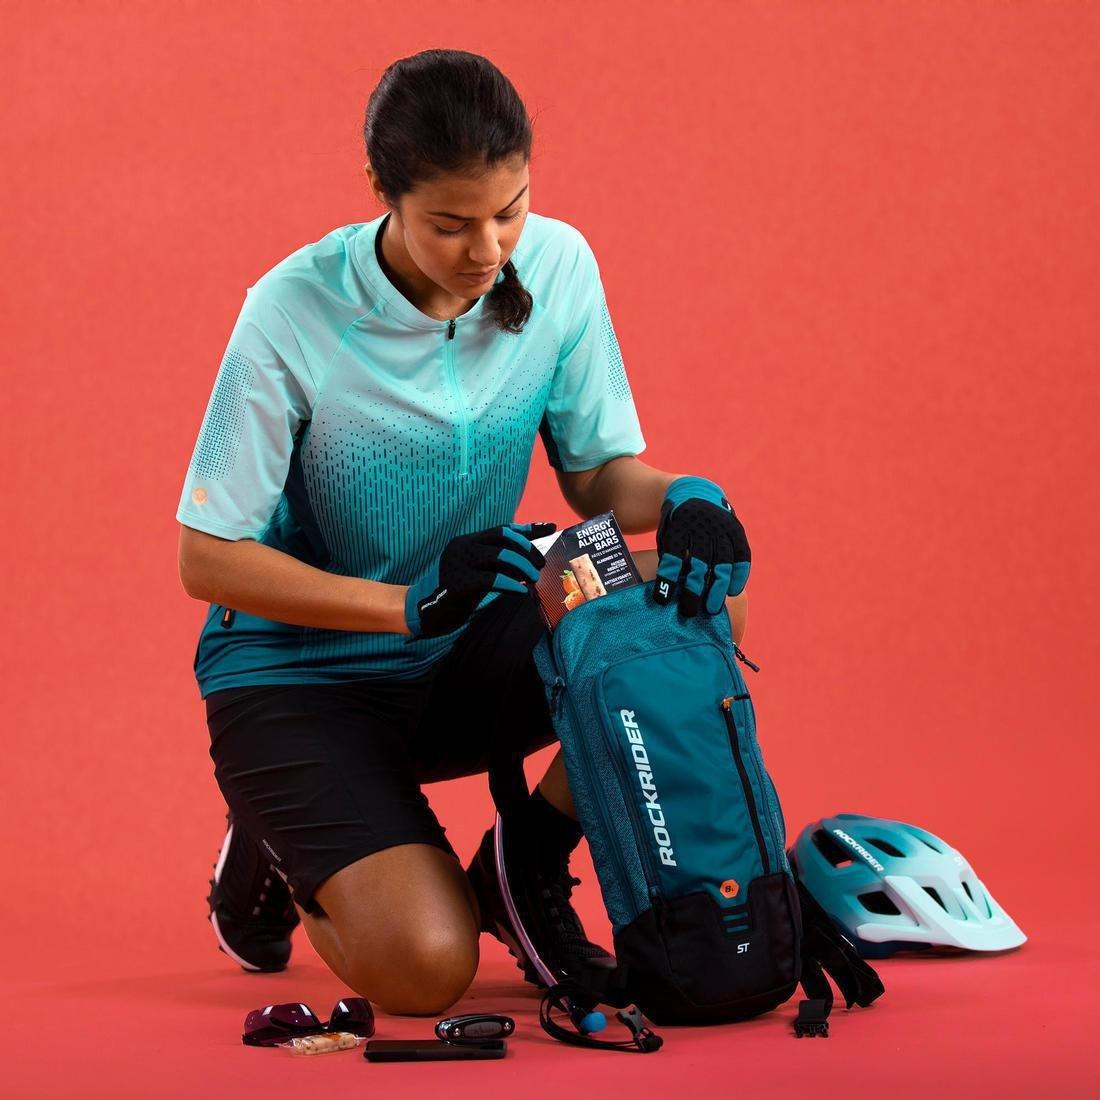 ROCKRIDER - Mountain Bike Hydration Backpack St 520, Deep Petrol Blue